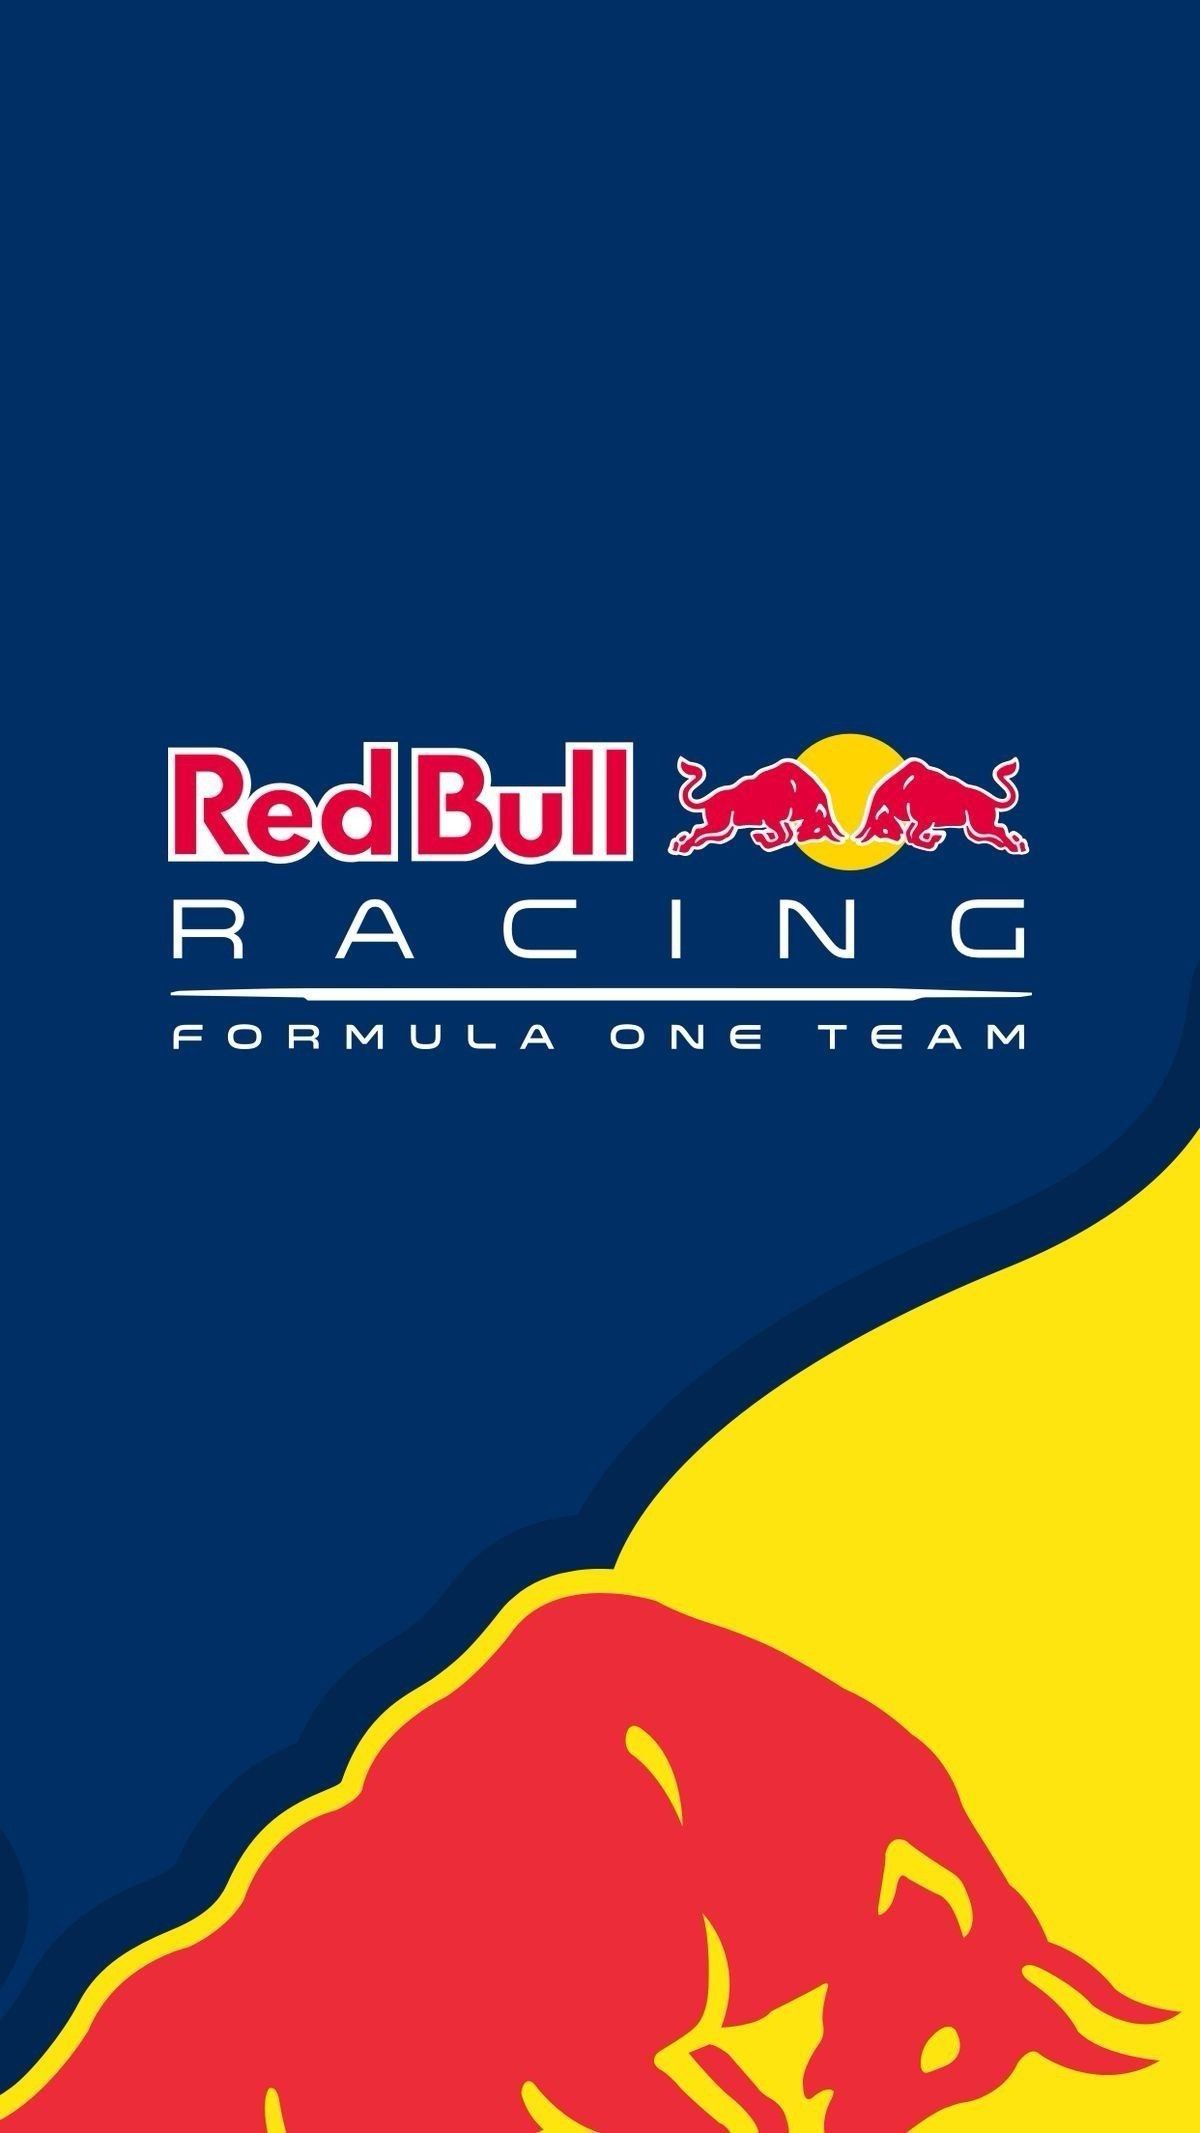 Red Bull Car Logo - Pin by sergio c dorado on Favorite images | Pinterest | Red bull ...